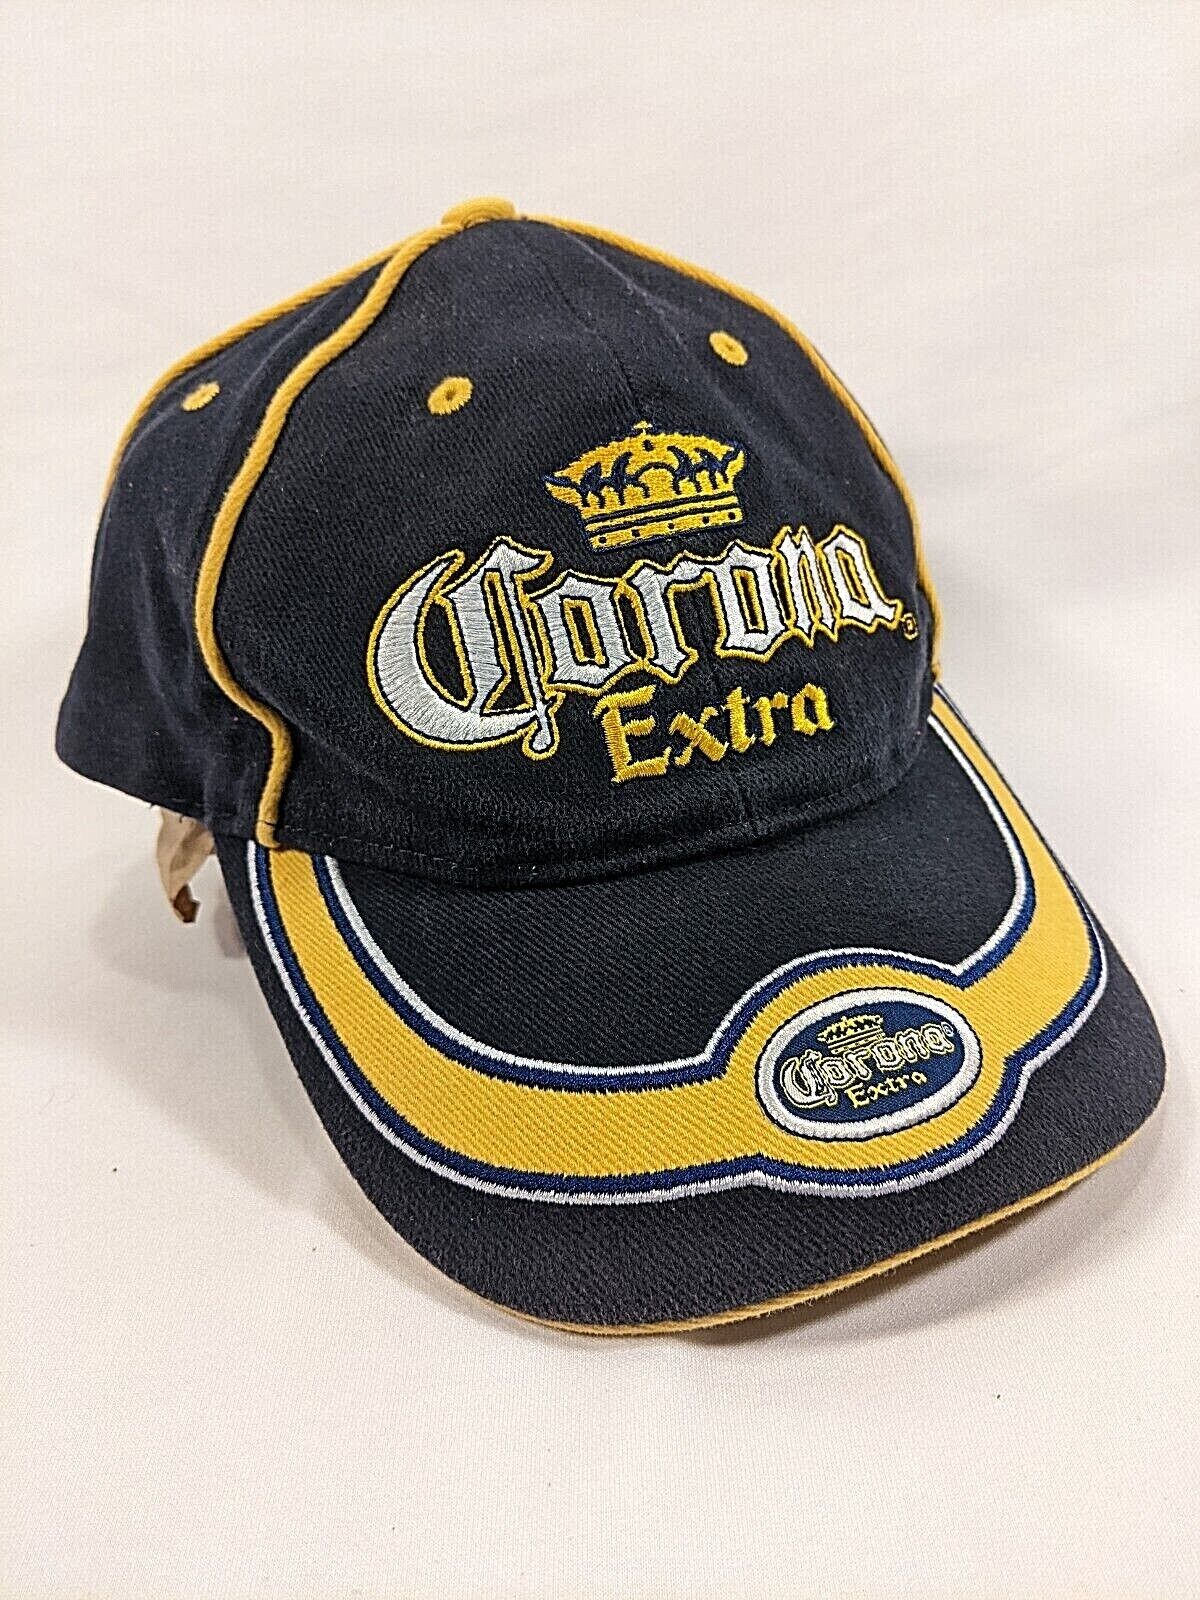 Corona Extra Hat Cap Baseball Beer Strap Back Embroidered Logo black Gold.